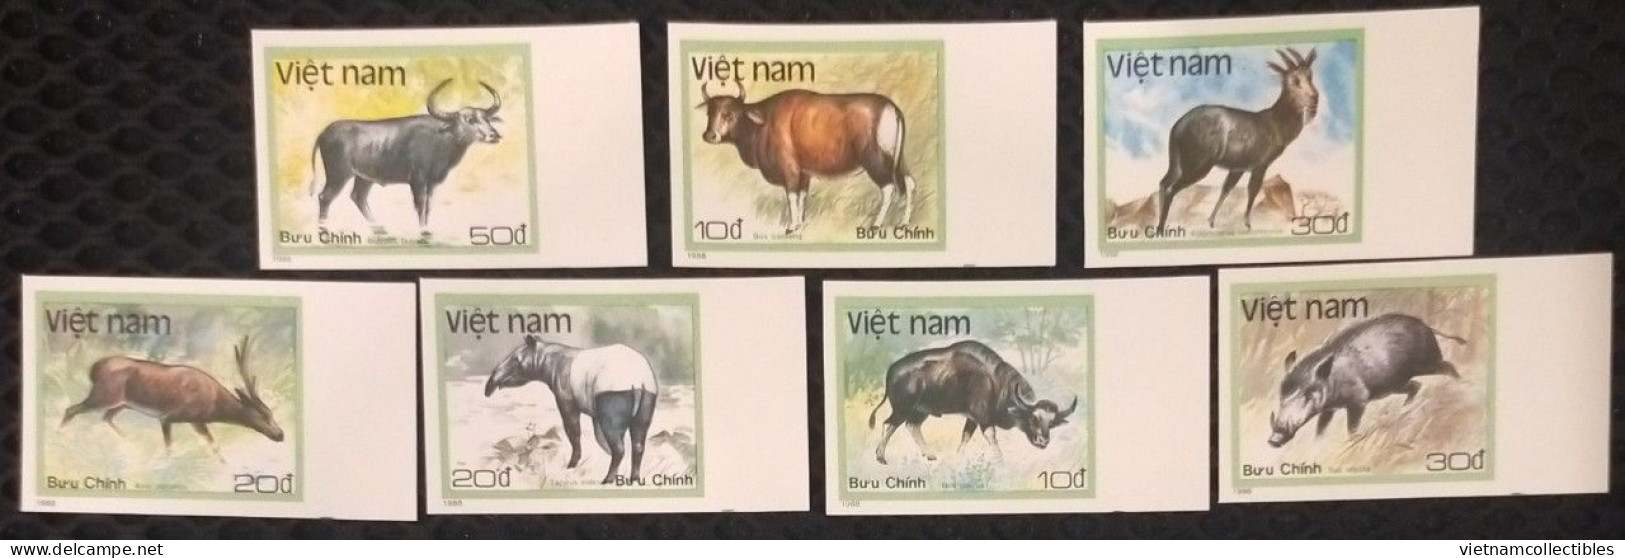 Vietnam Viet Nam MNH Imperf Stamps 1988 : Wild Animals / Tapir / Boar / Buffalo / Deer / Goat (Ms554) - Viêt-Nam